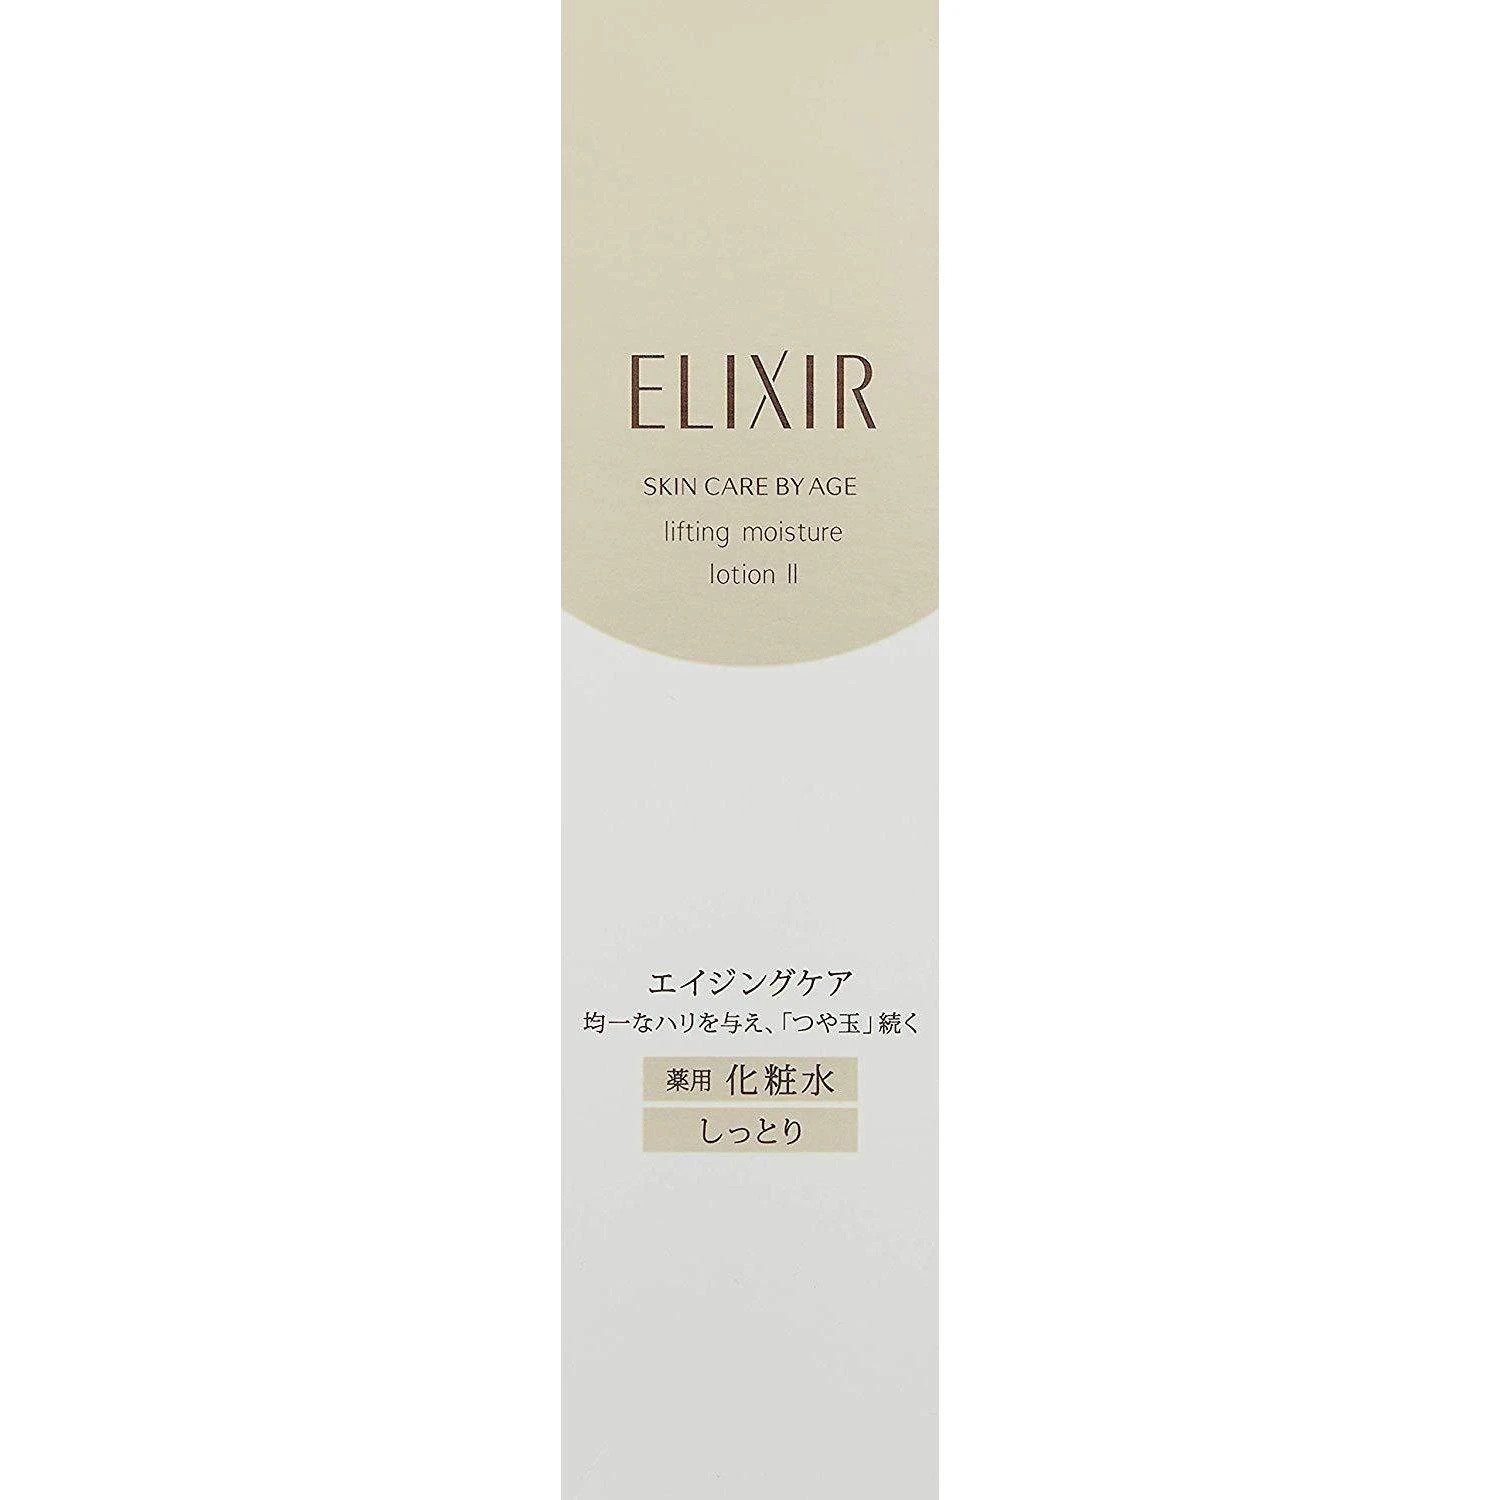 Shiseido ELIXIR Superieur Lifting Moisture Lotion II